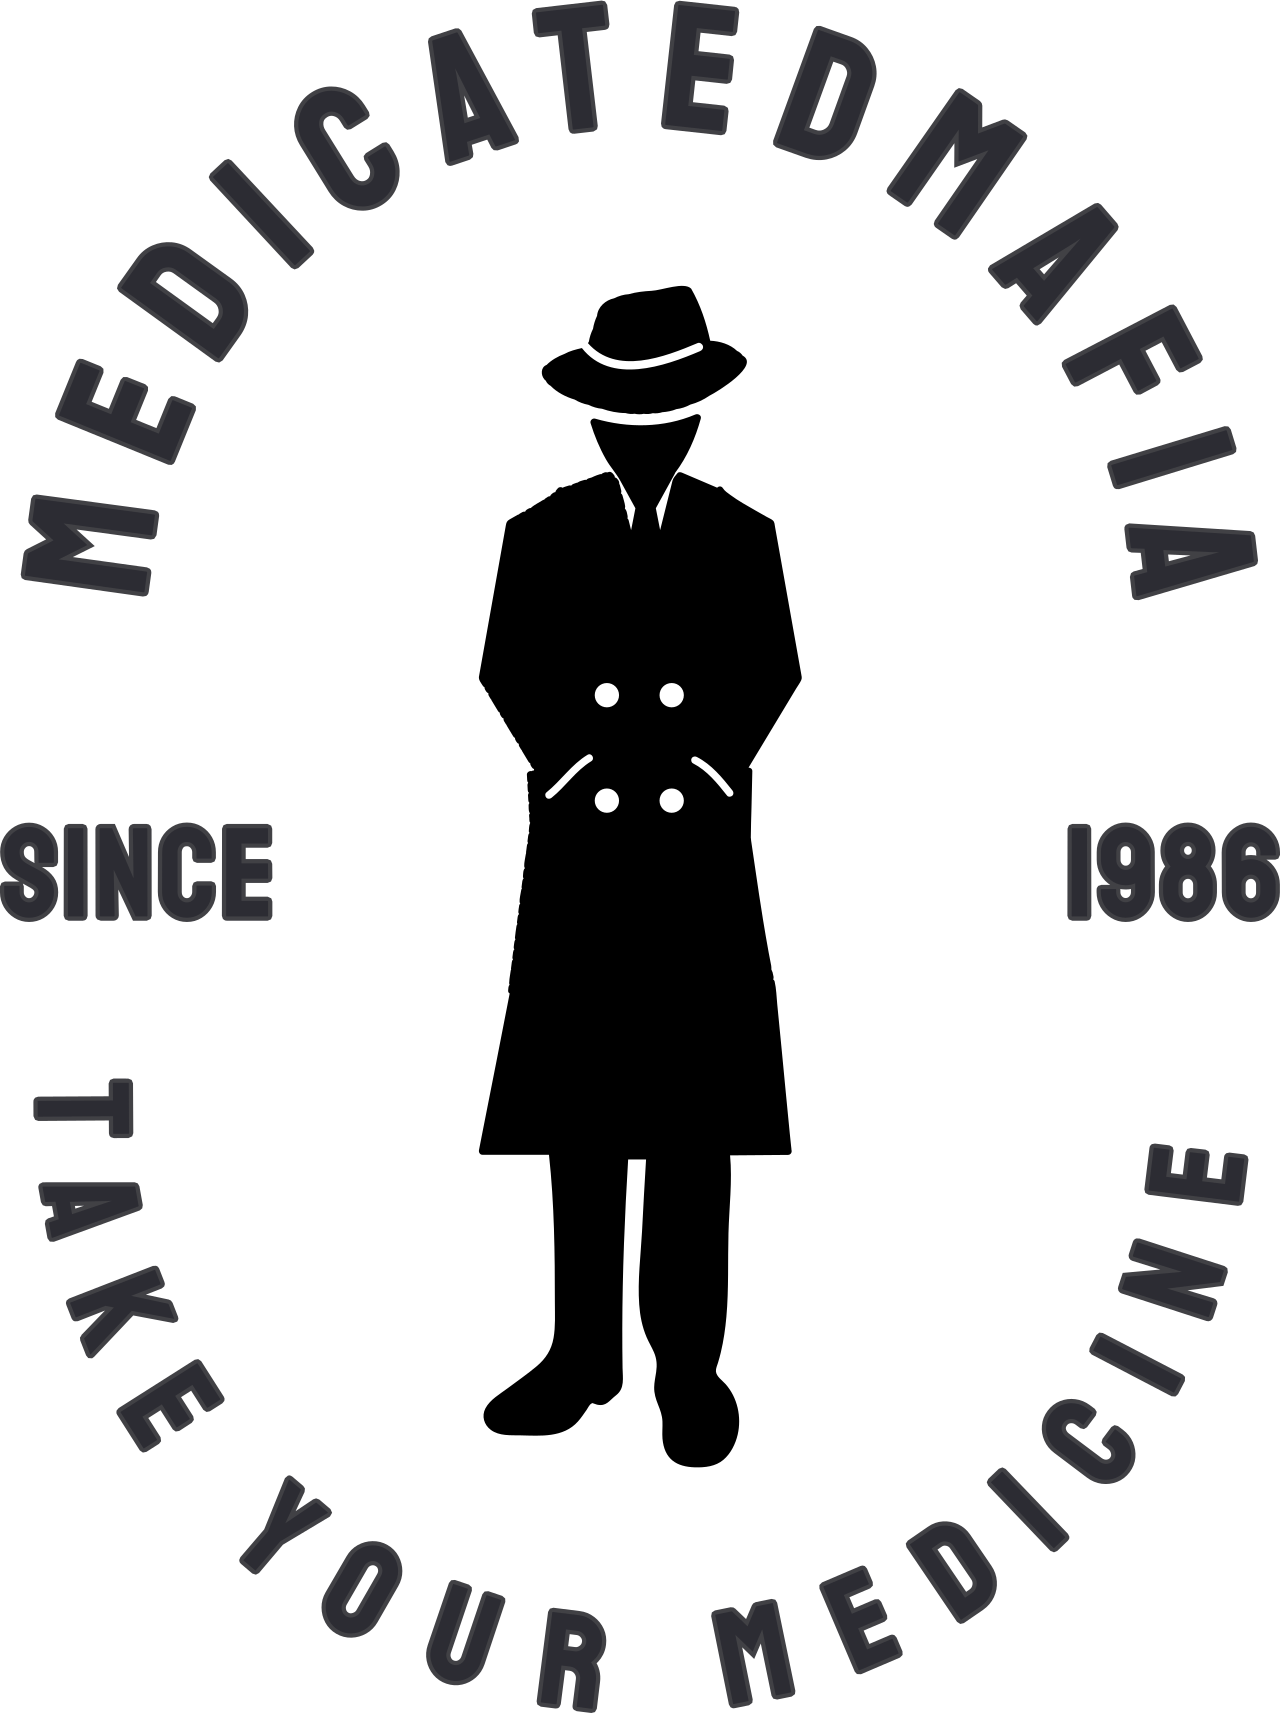 MEDICATEDMAFIA's logo